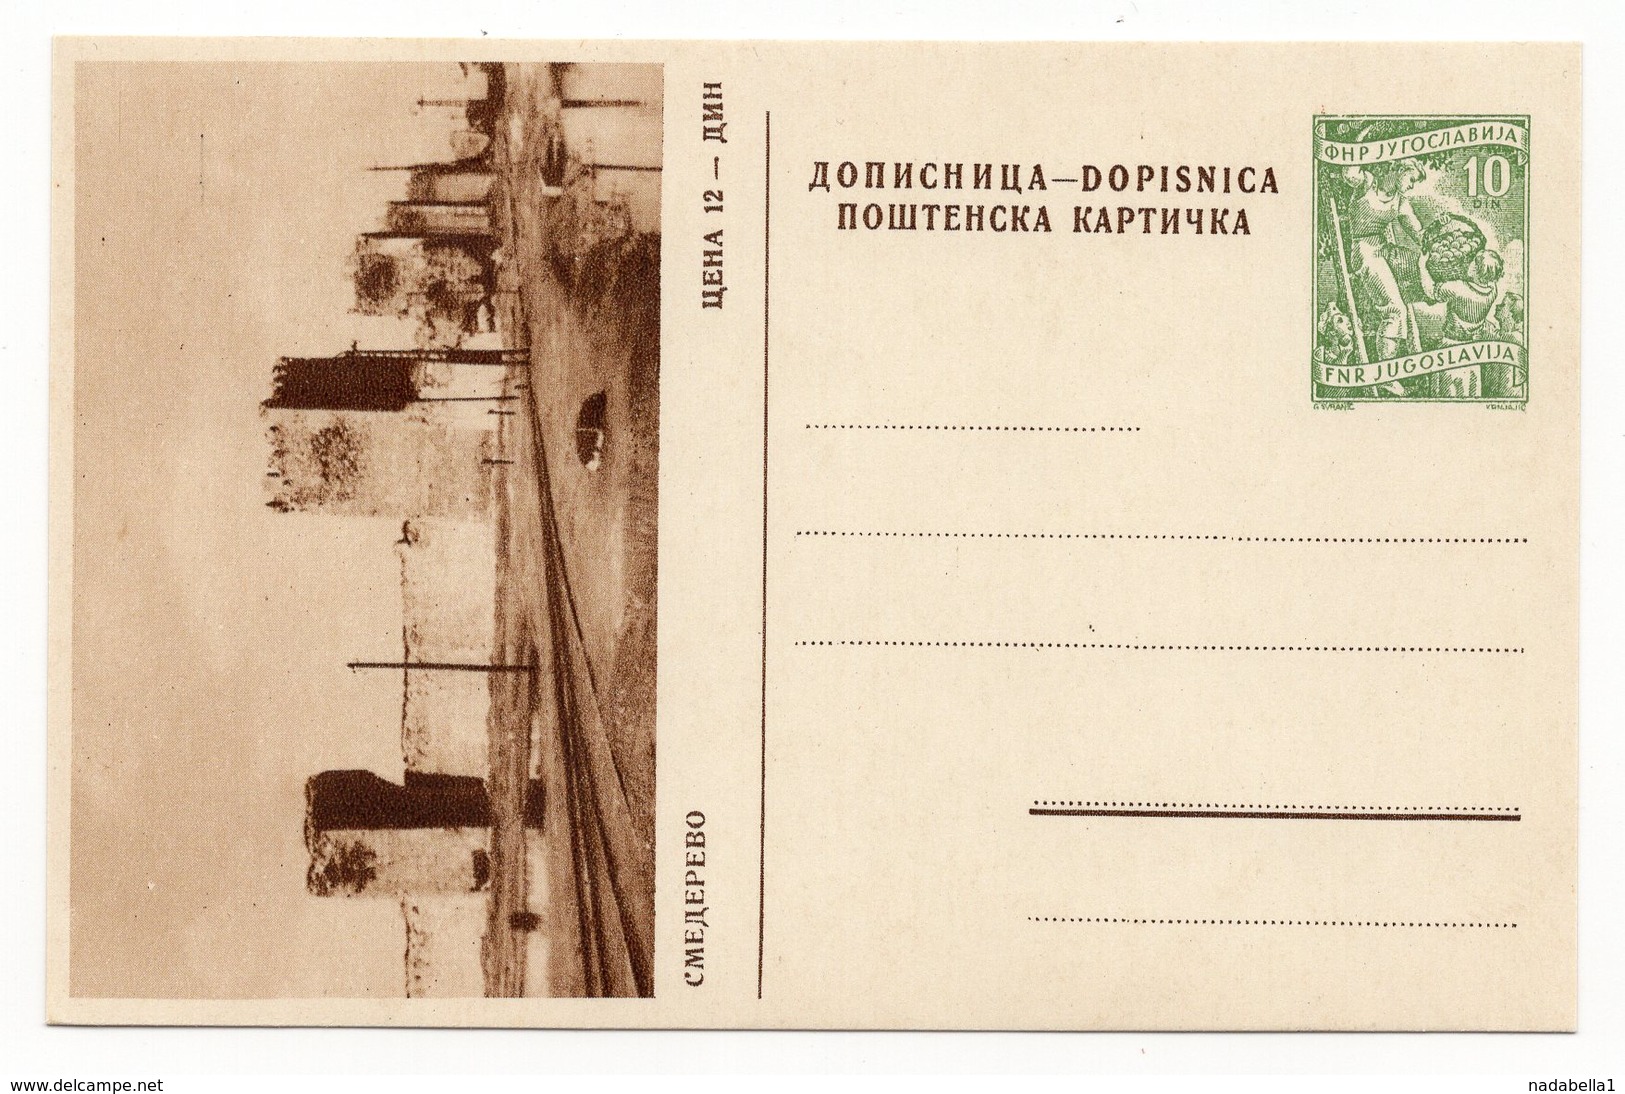 1956, YUGOSLAVIA, SMEDEREVO, FORTRESS, SERBIA, 10 DINARA, GREEN, ILLUSTRATED STATIONERY CARD, MINT - Postal Stationery